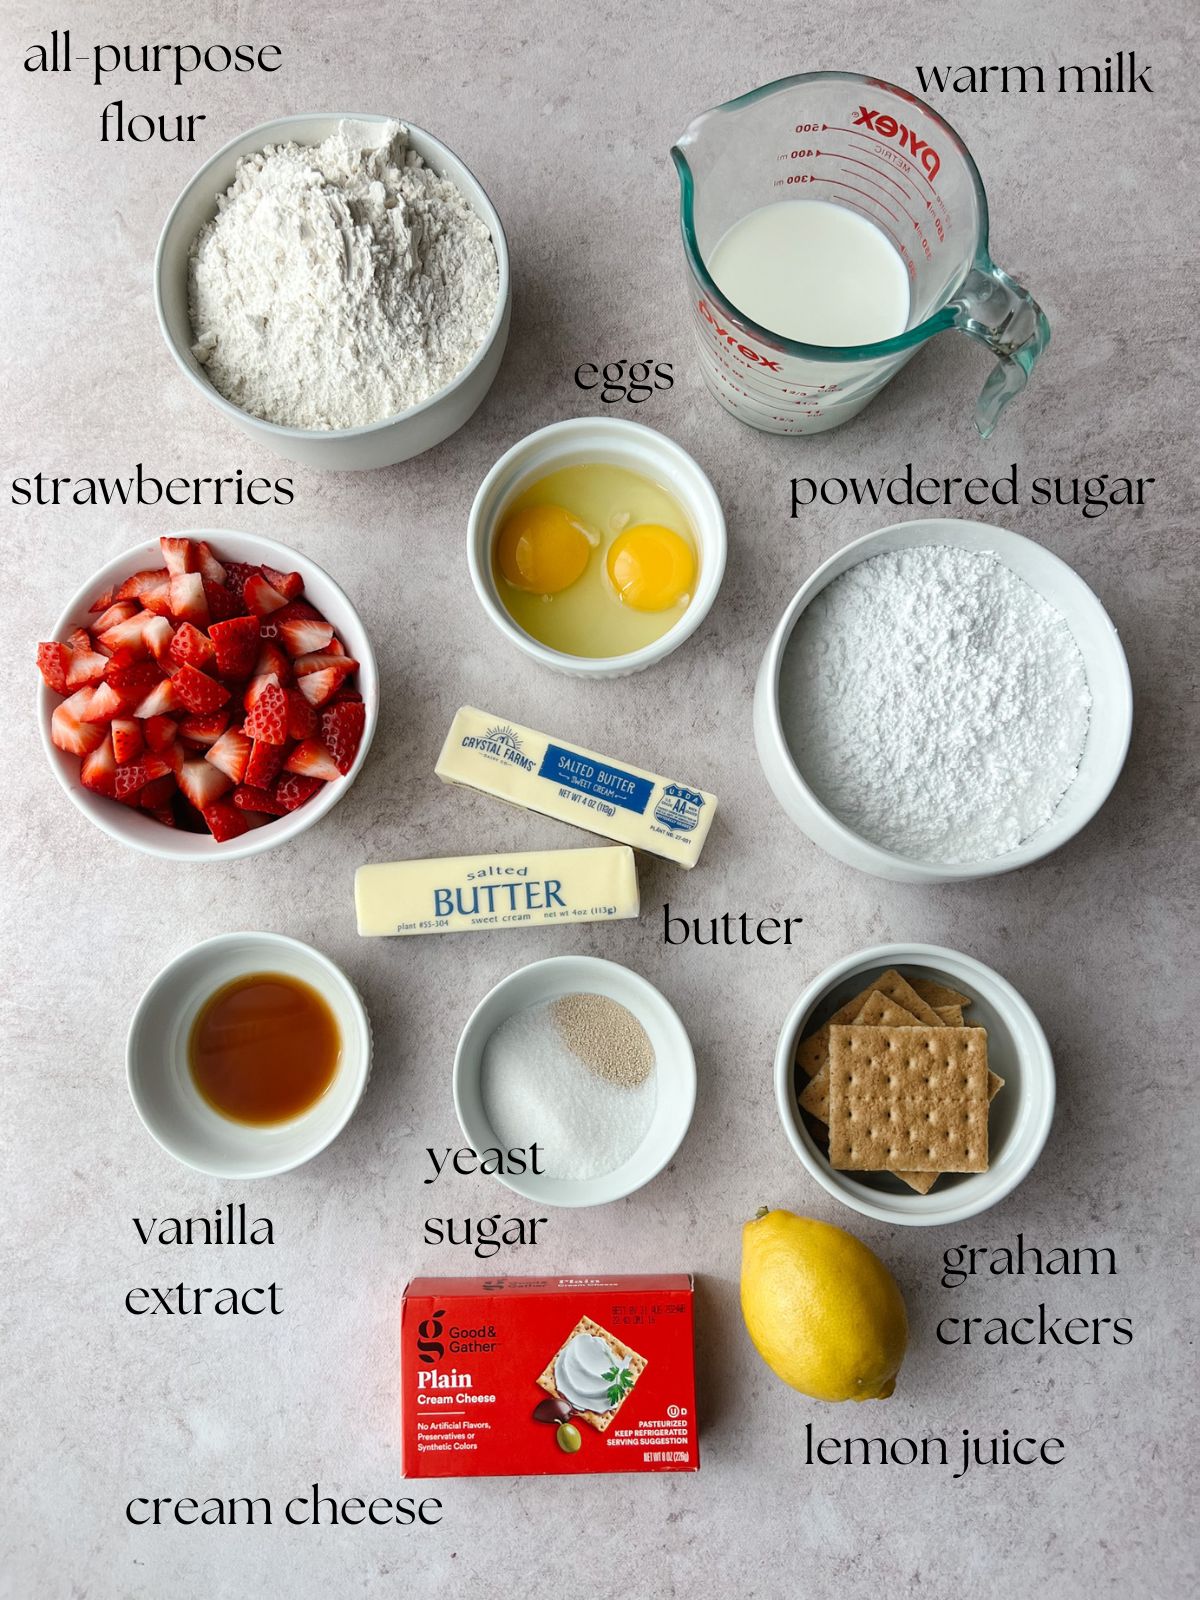 Ingredients for the strawberry cheesecake sweet rolls: warm milk, flour, eggs, powdered sugar, strawberries, butter, vanilla extract, yeast, sugar, graham crackers, cream cheese, lemon juice.